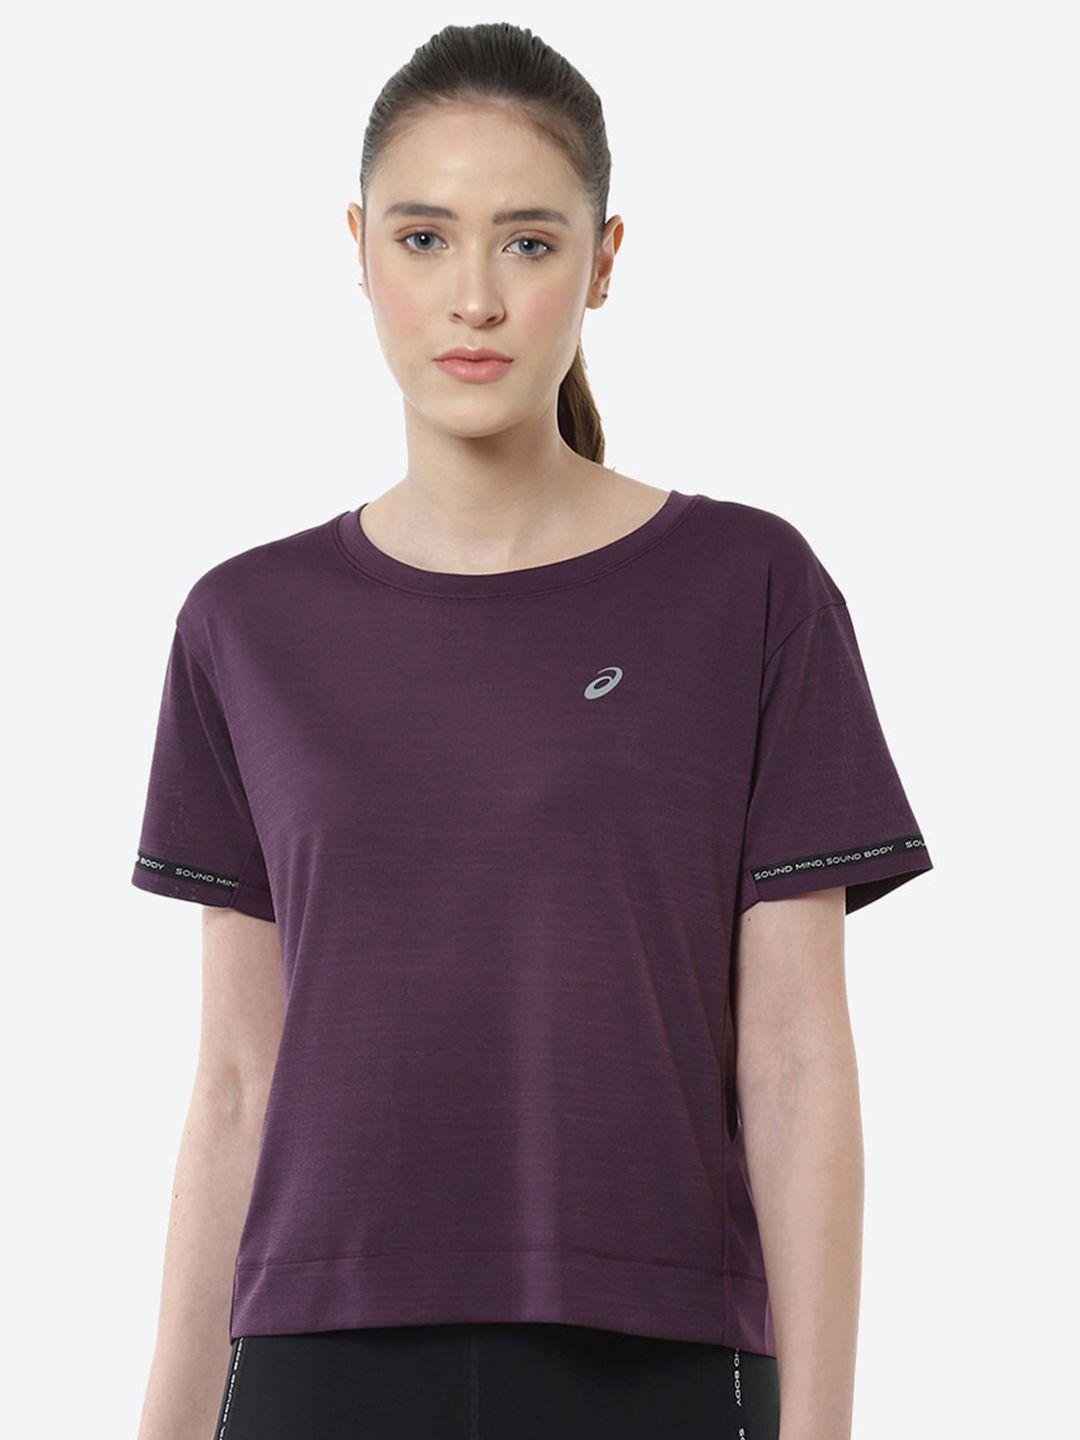 asics-women-purple-solid-race-crop-t-shirt